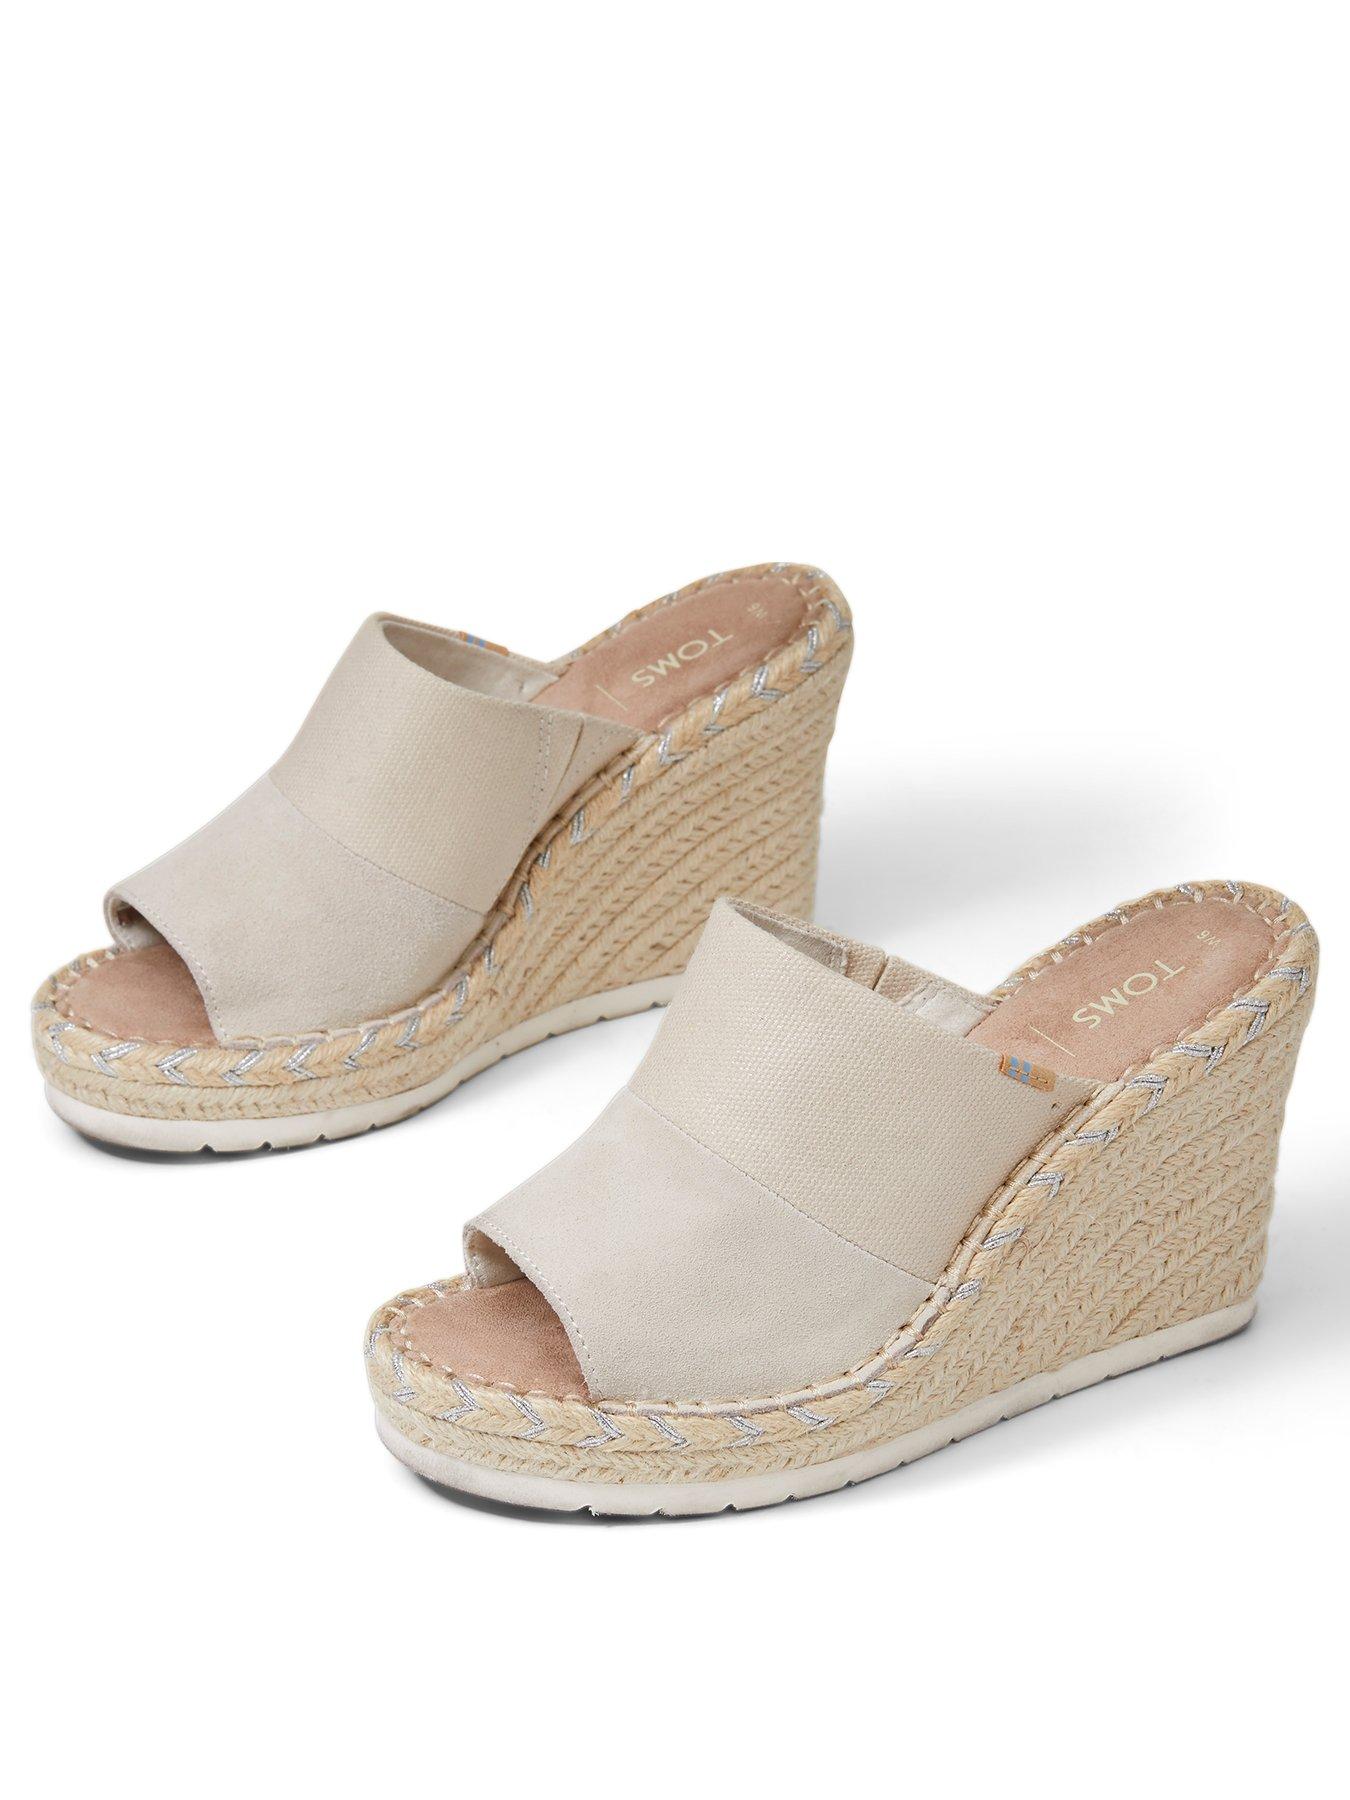 Ladies Sandals | Flip Flops 